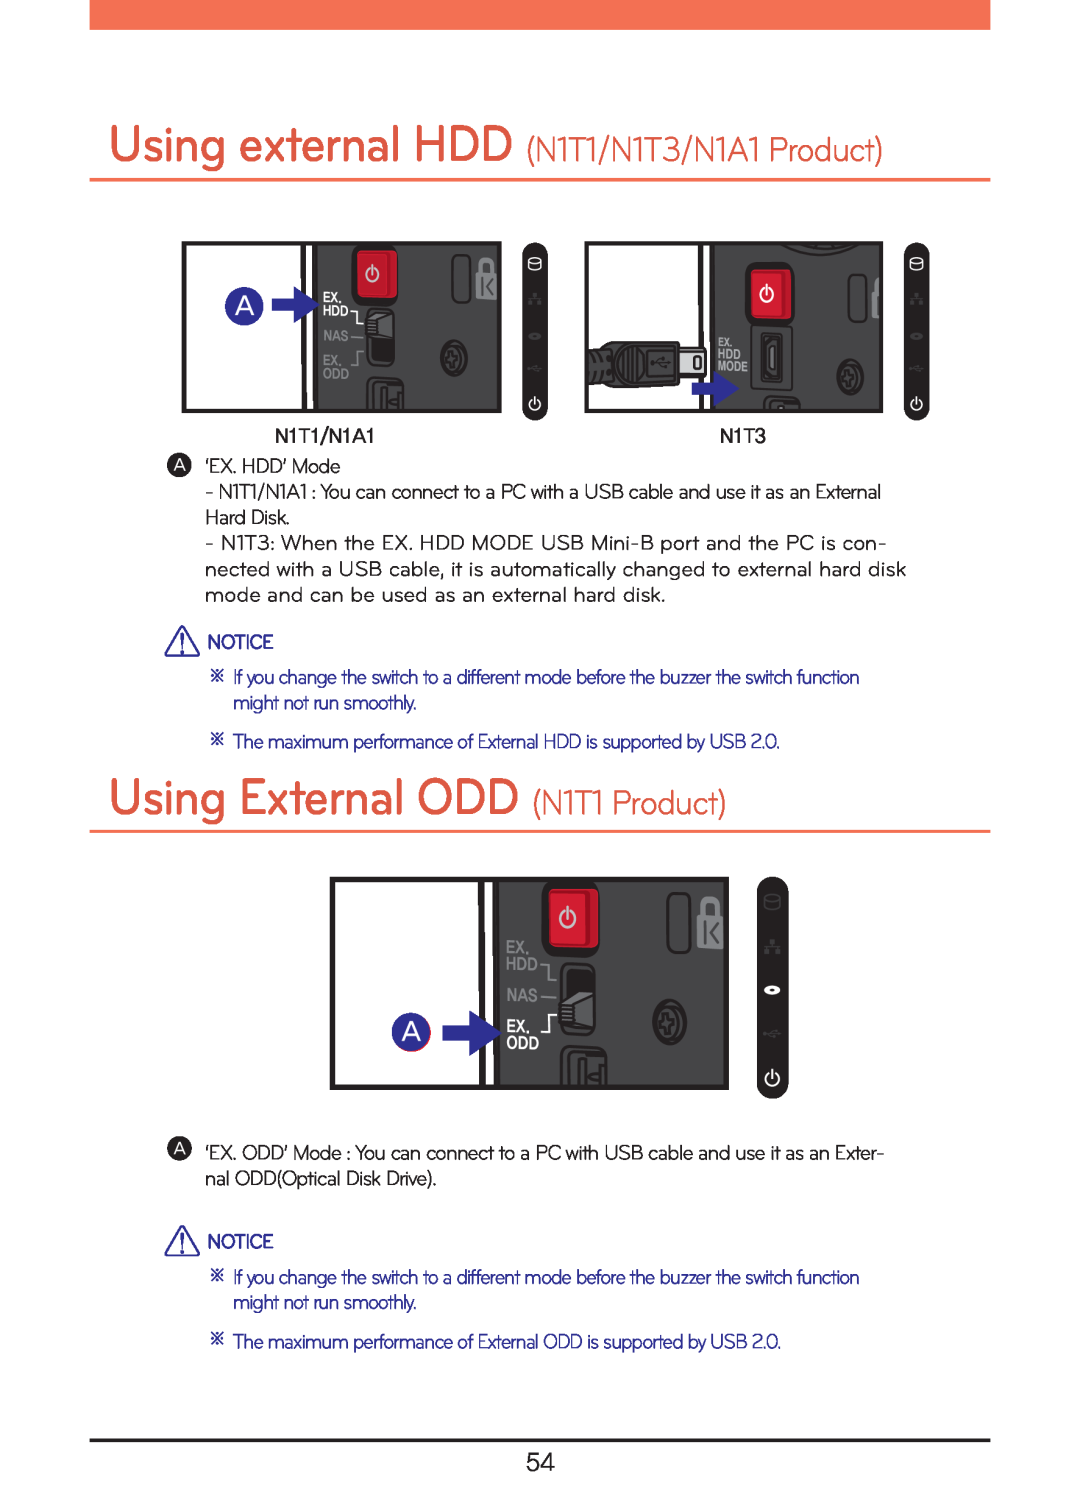 LG Electronics N2R5, N2A2, N2B5 owner manual Using External ODD N1T1 Product, Using external HDD N1T1/N1T3/N1A1 Product 